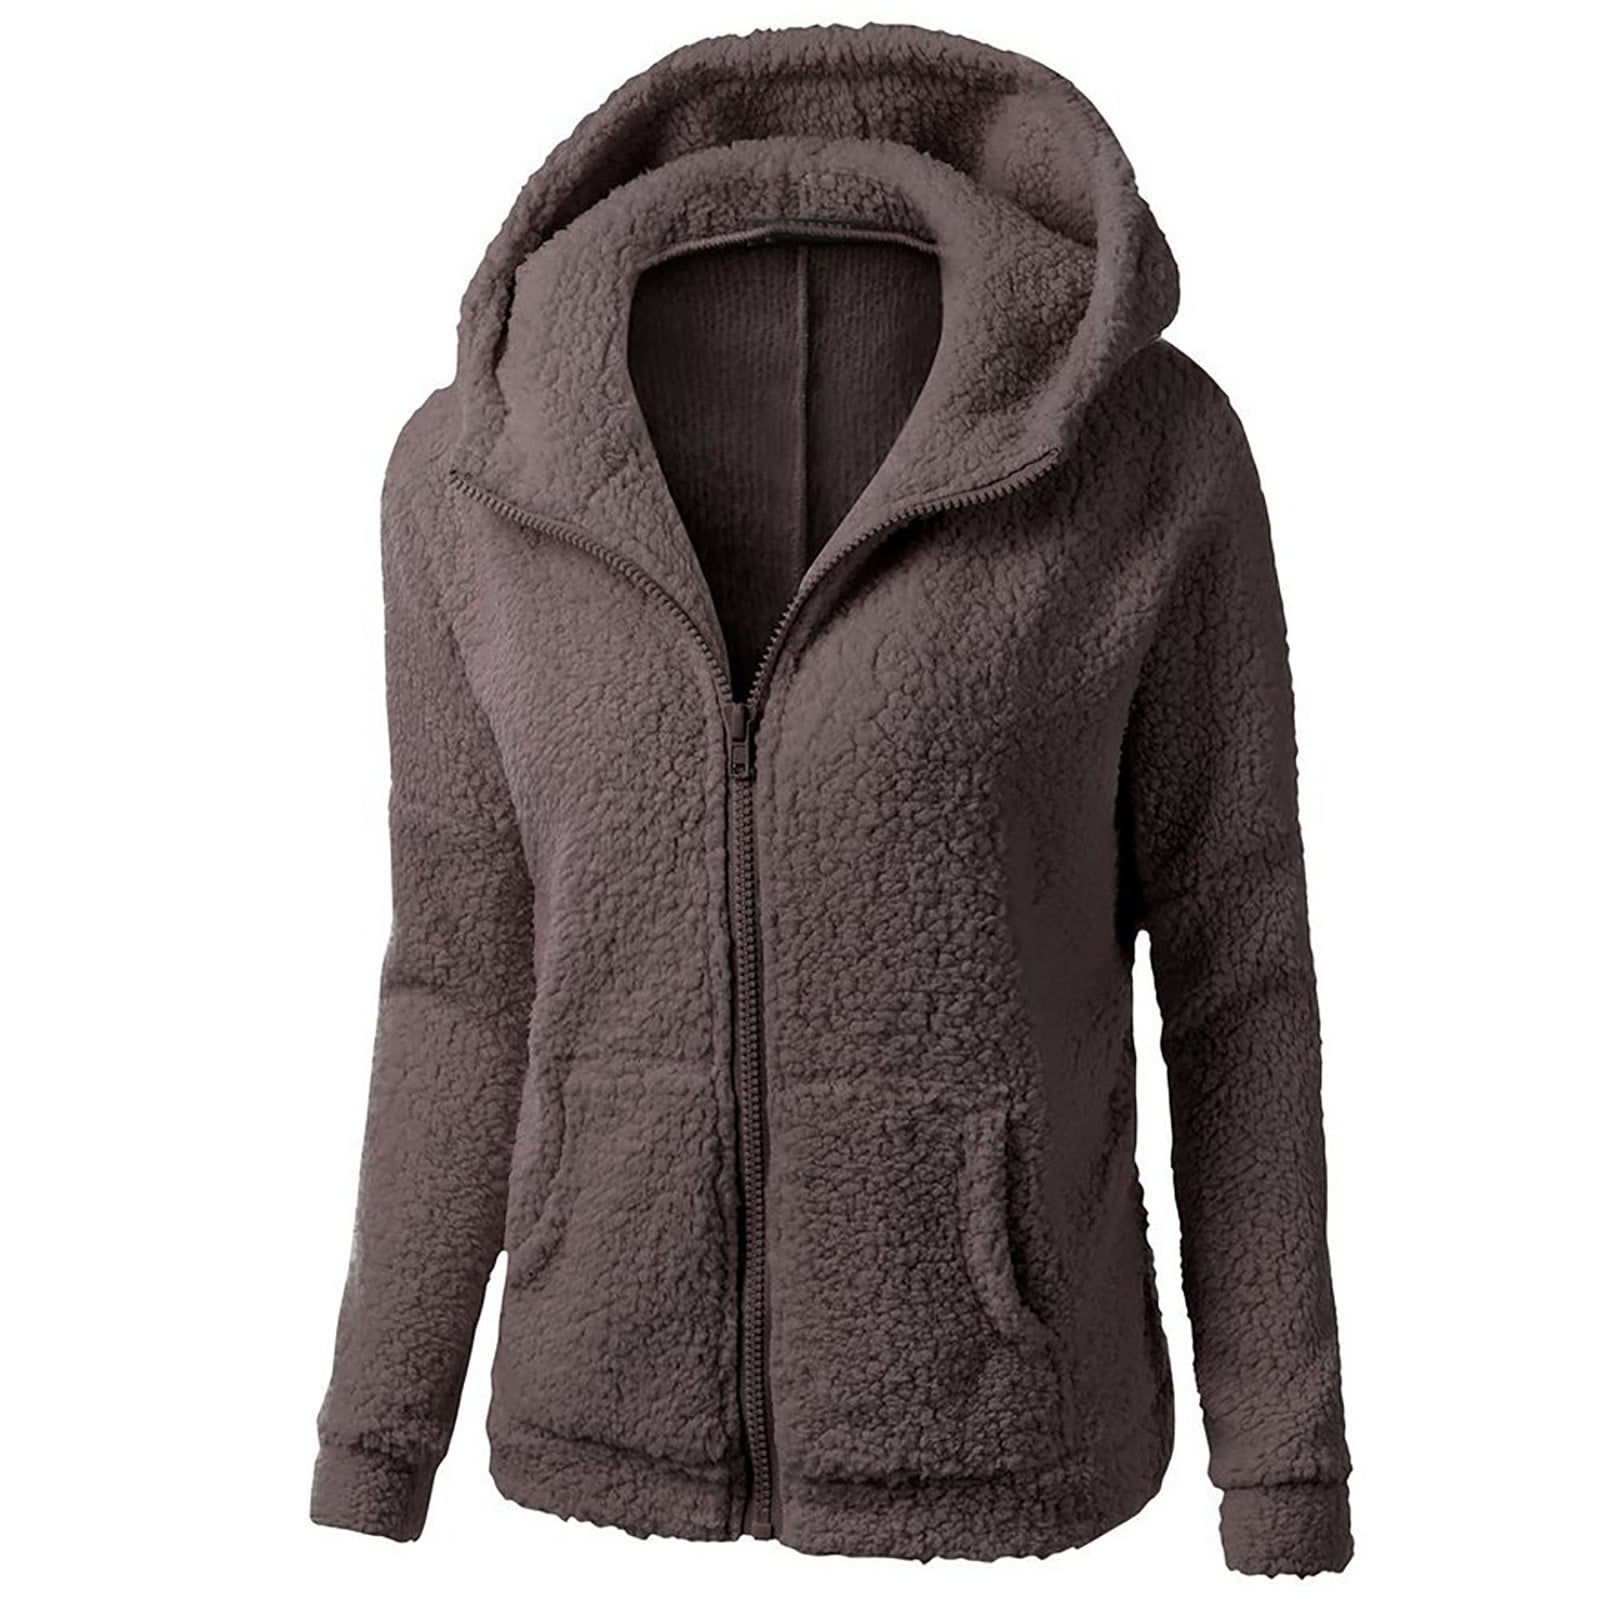 Tbopshirt Cardigan for Women,Clearance Women Hooded Sweater Coat Winter ...